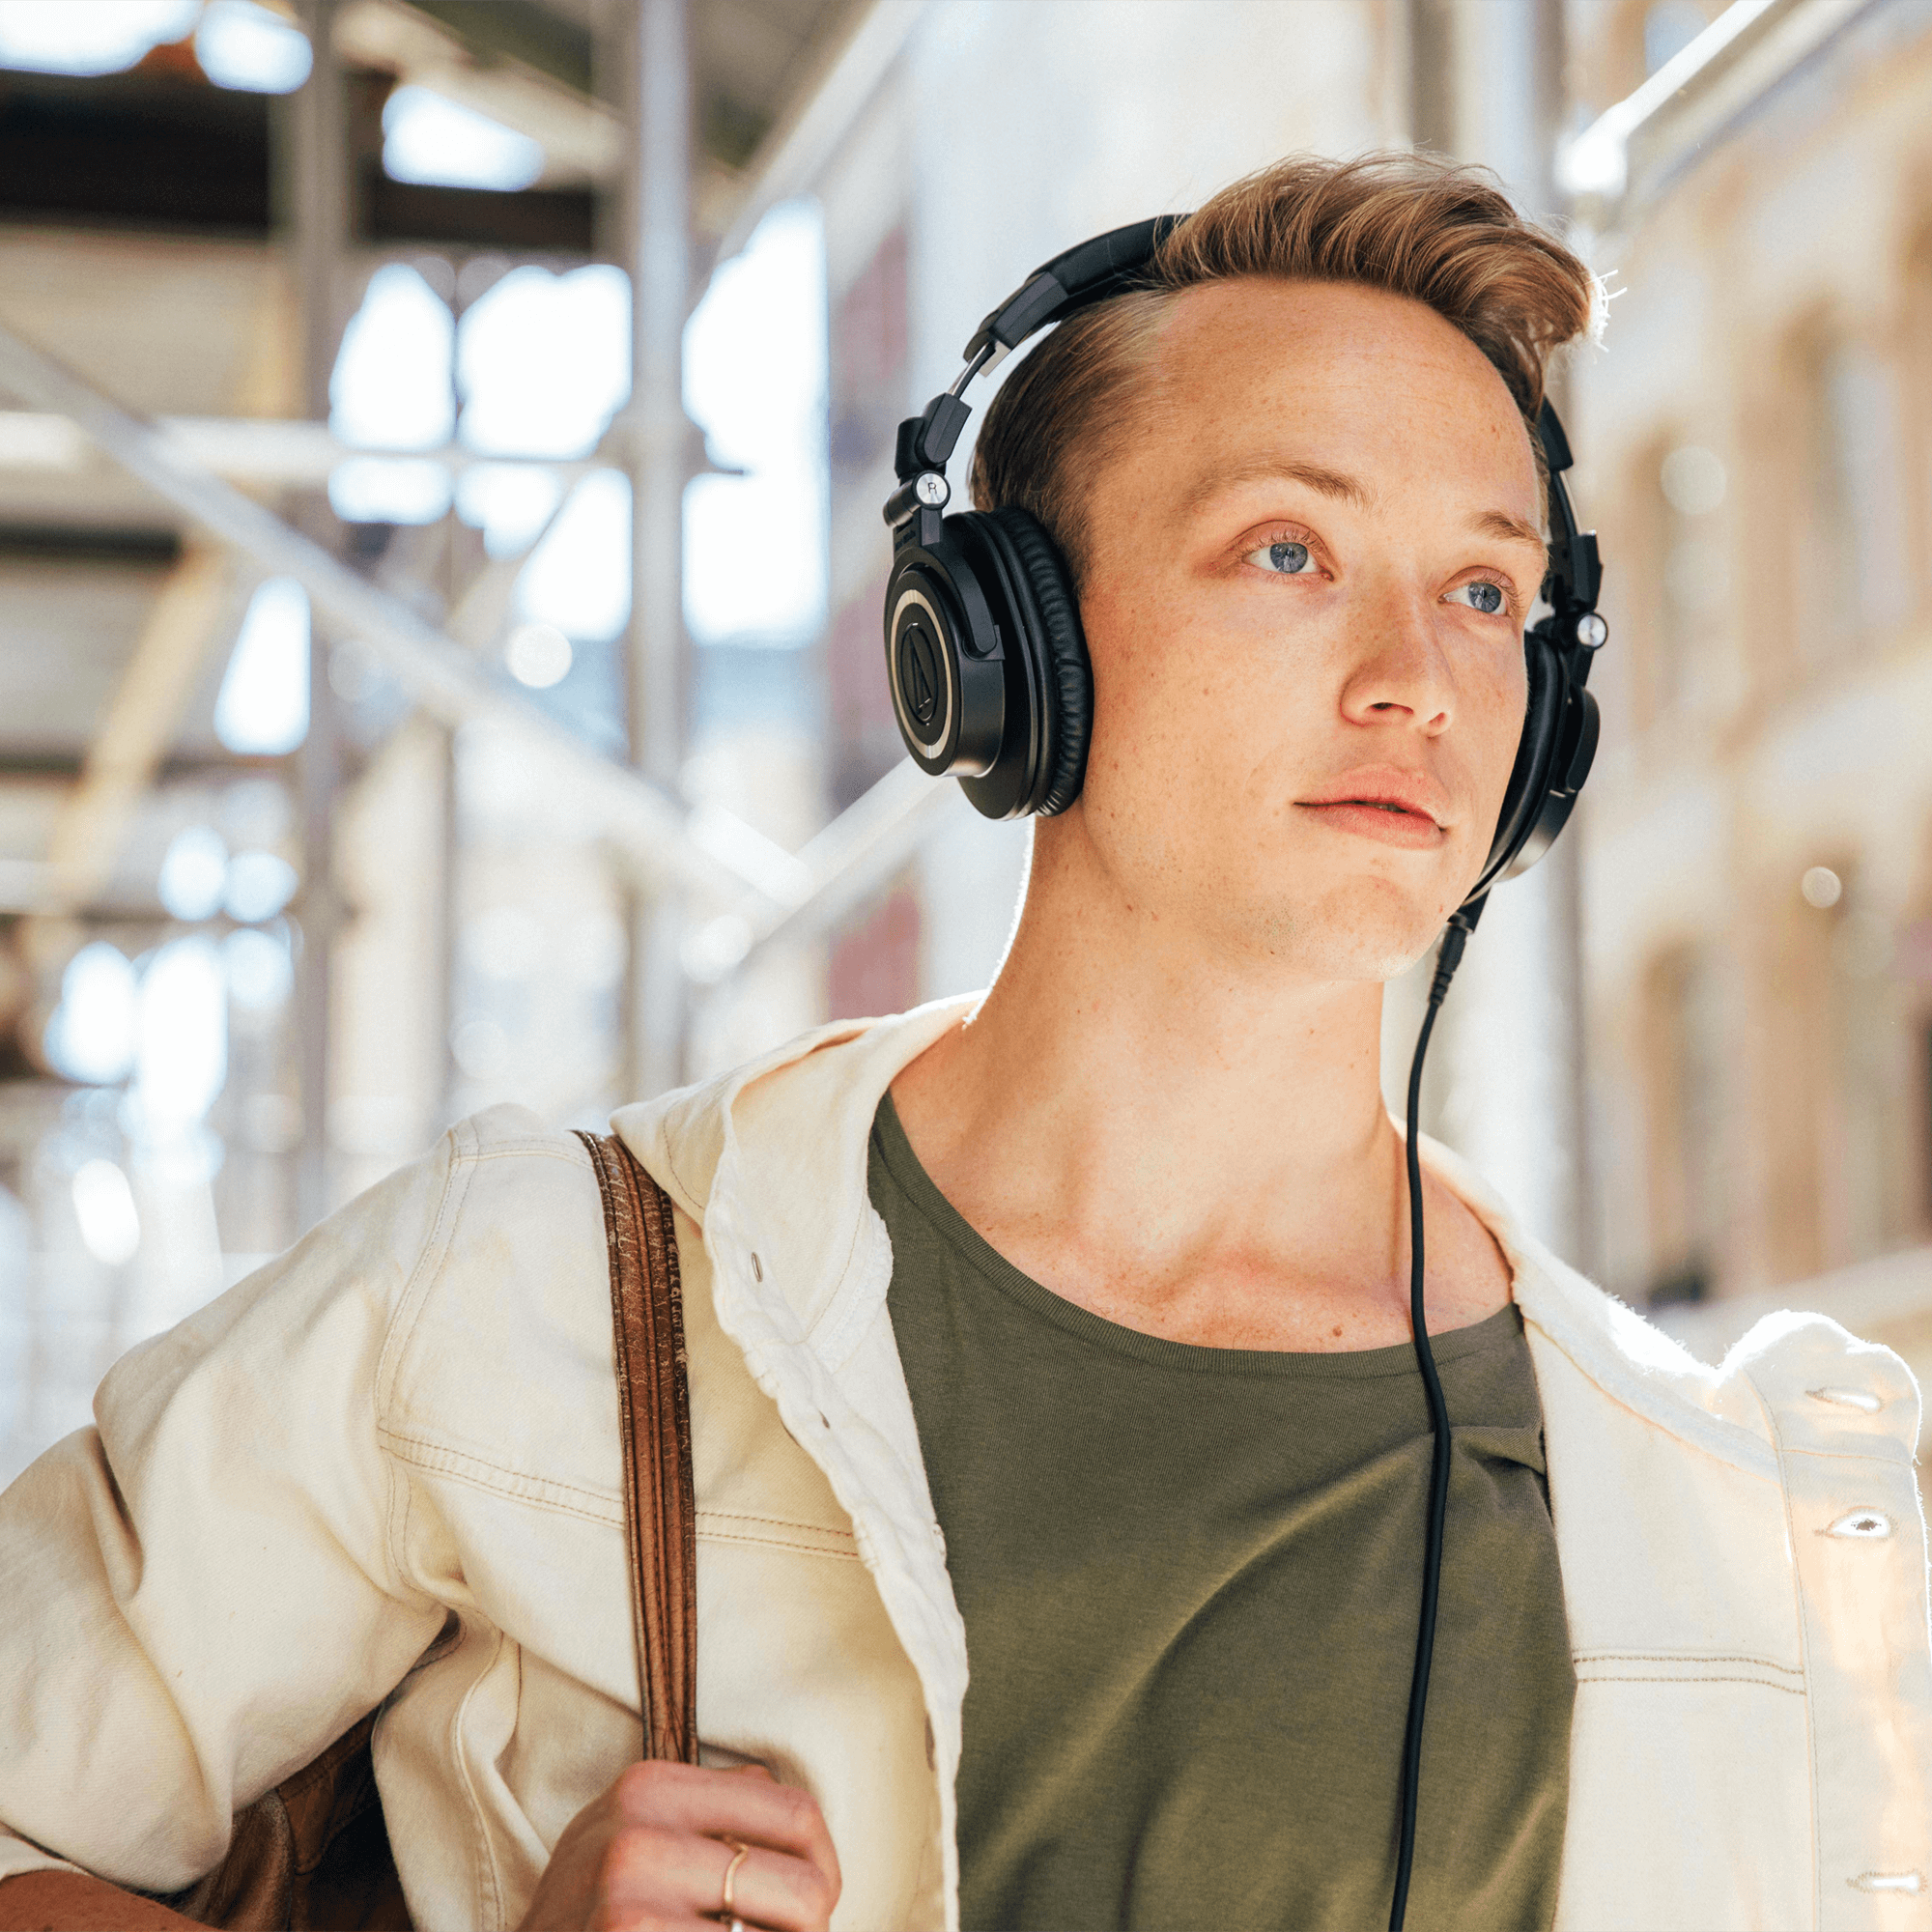 Audio Technica – Auriculares profesionales de monitorización ATH